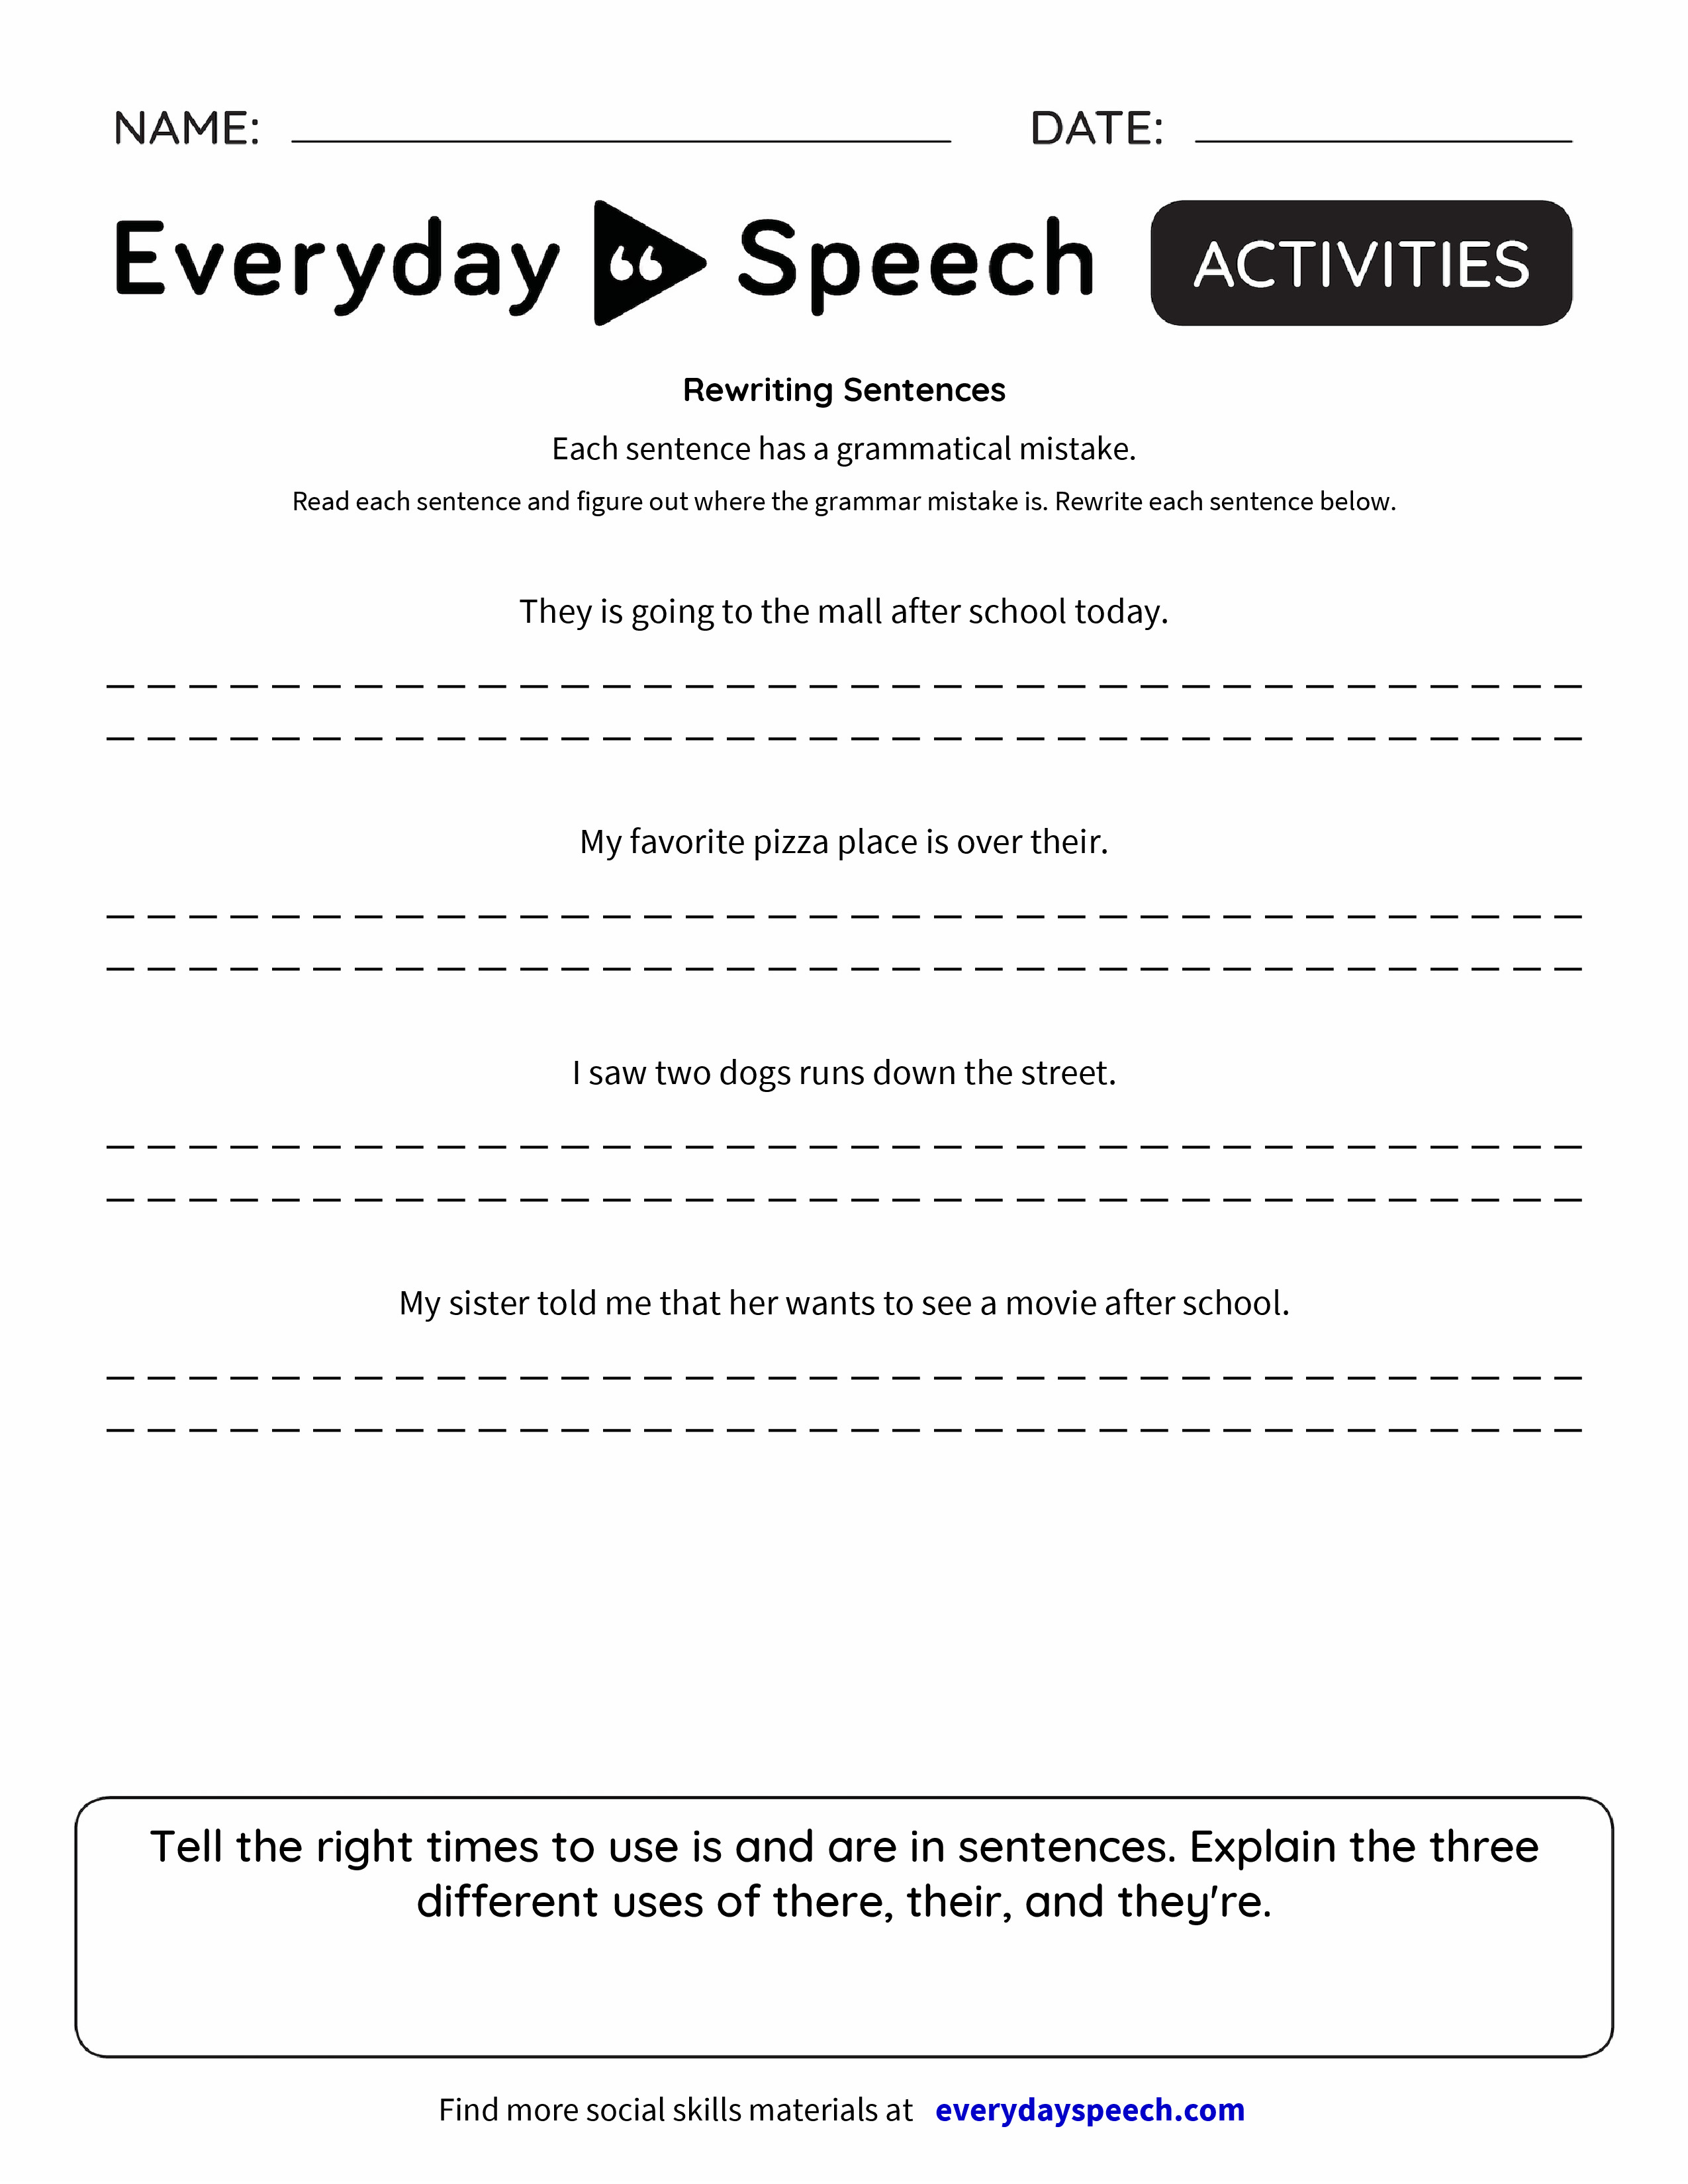 rewrite-sentences-english-esl-worksheets-pdf-doc